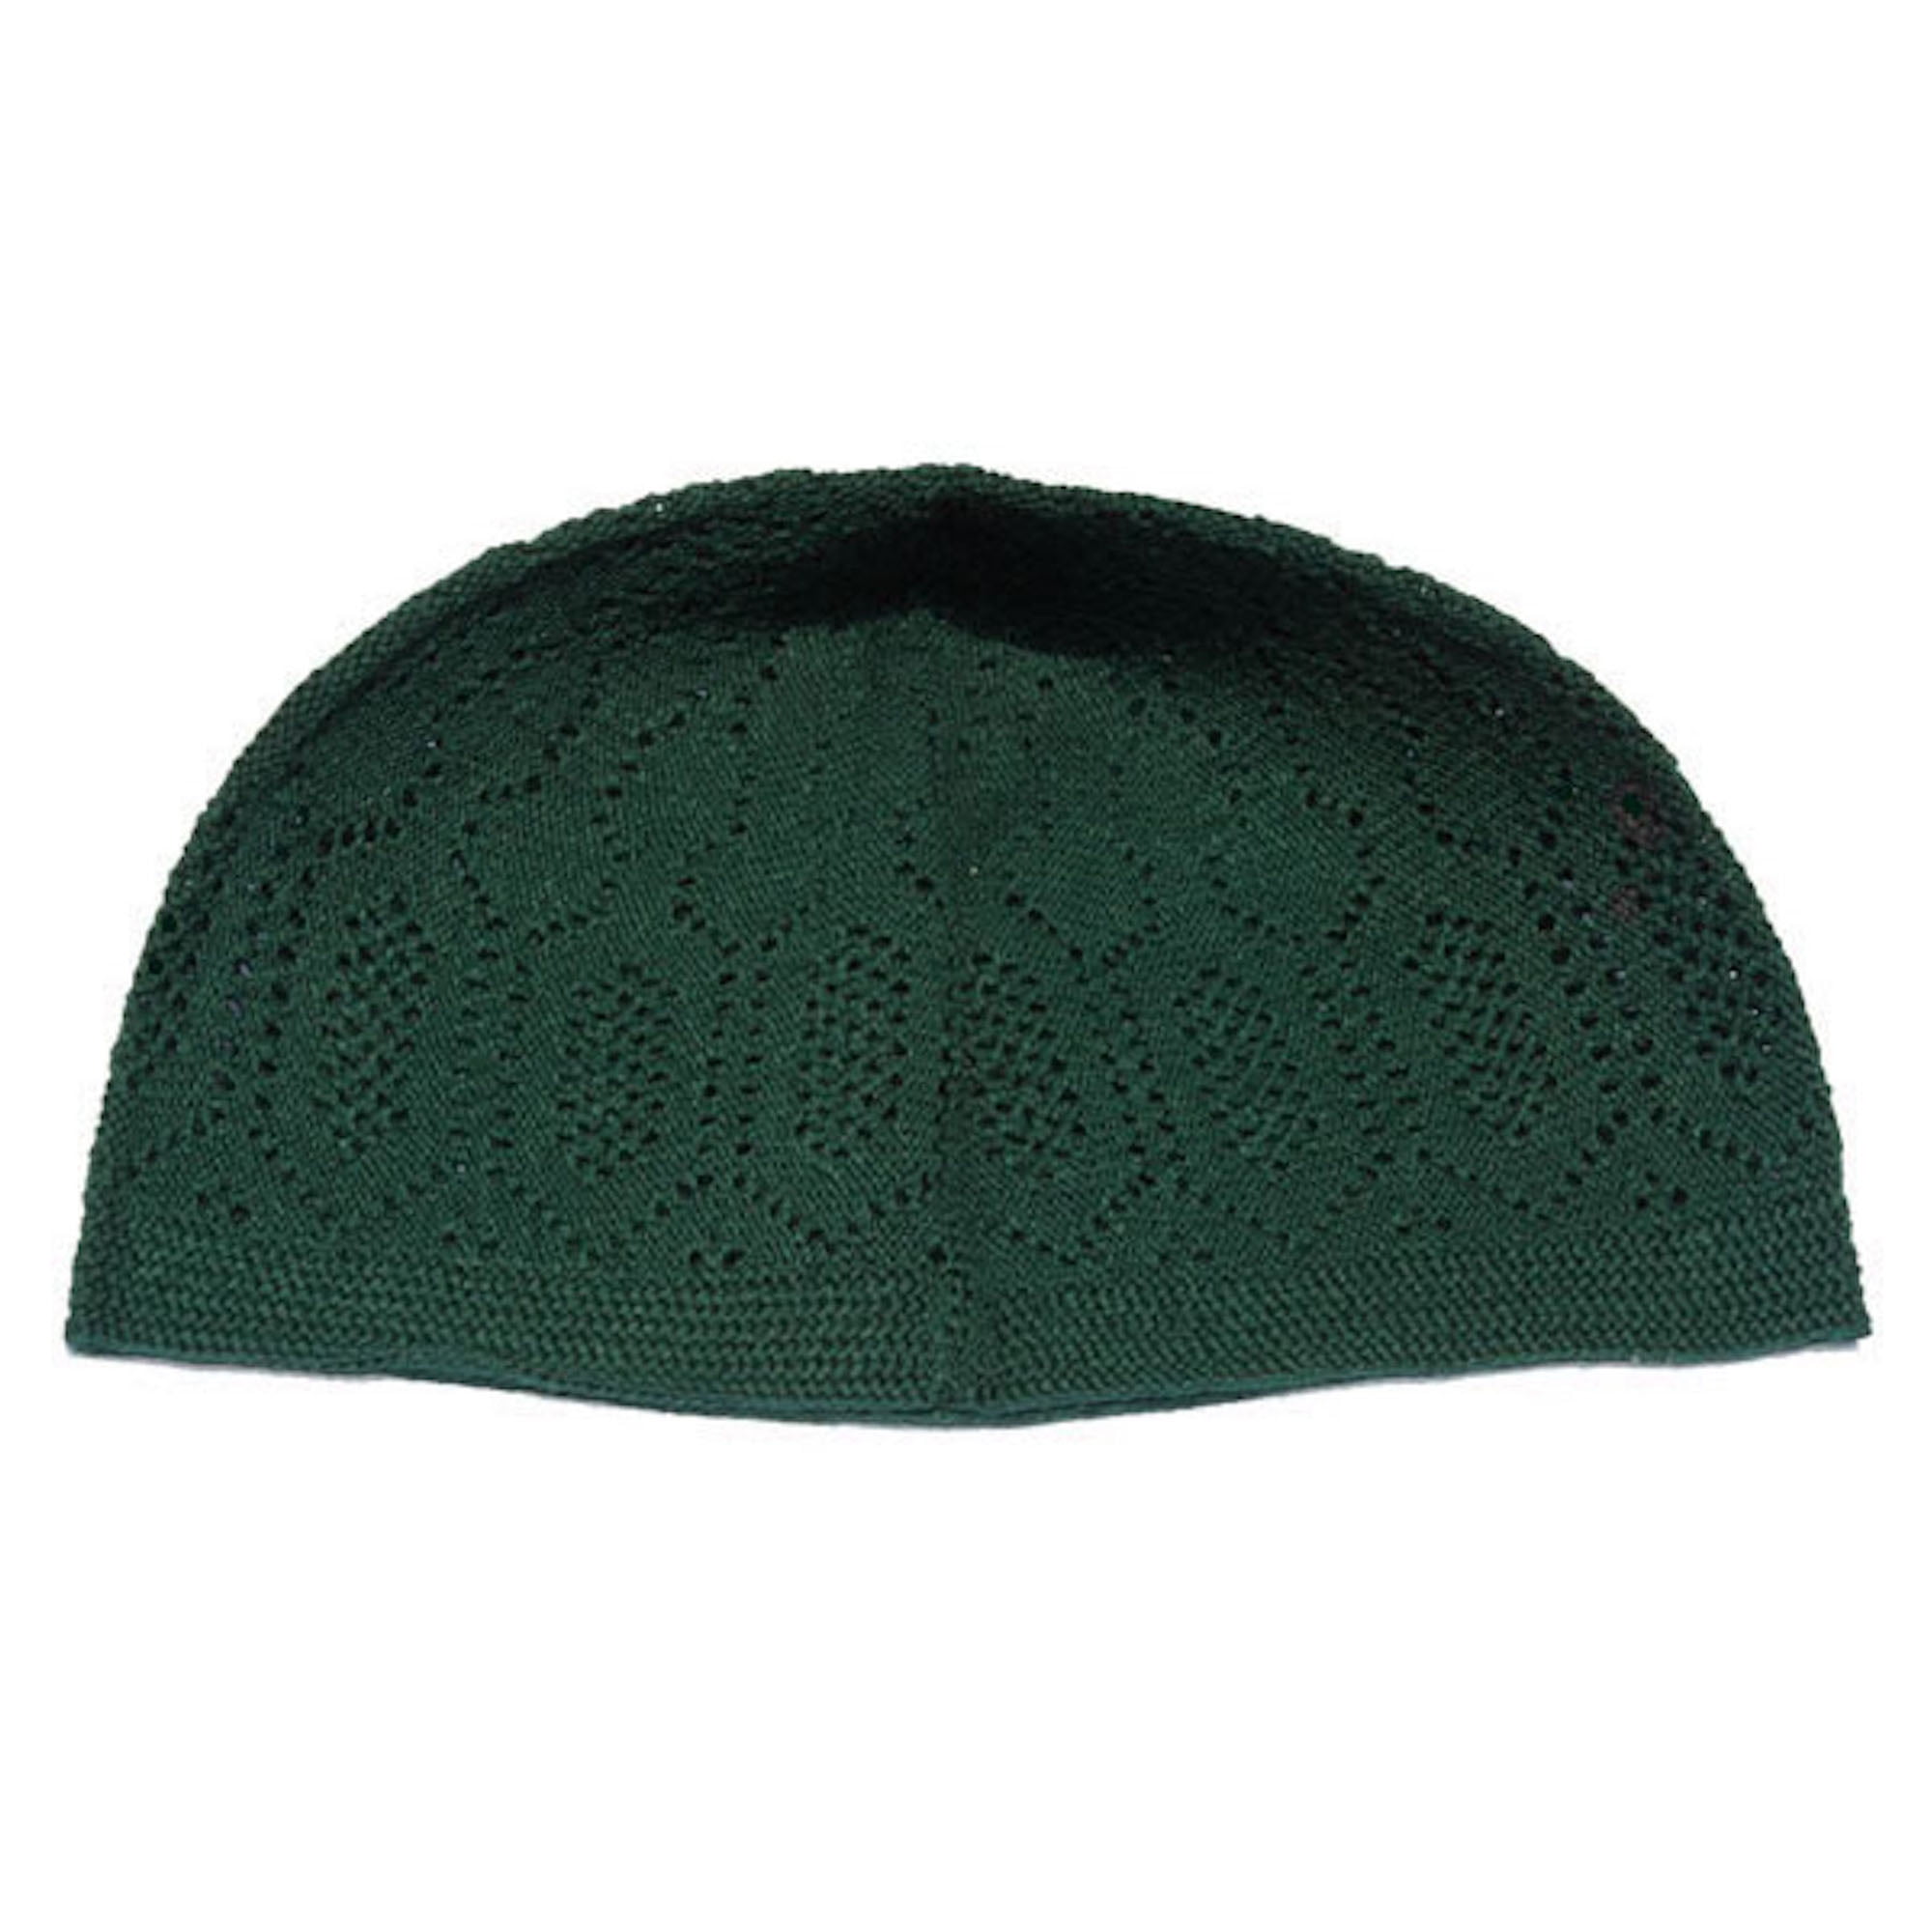 topi mosque hat mercan hat Green mens turkish hat 